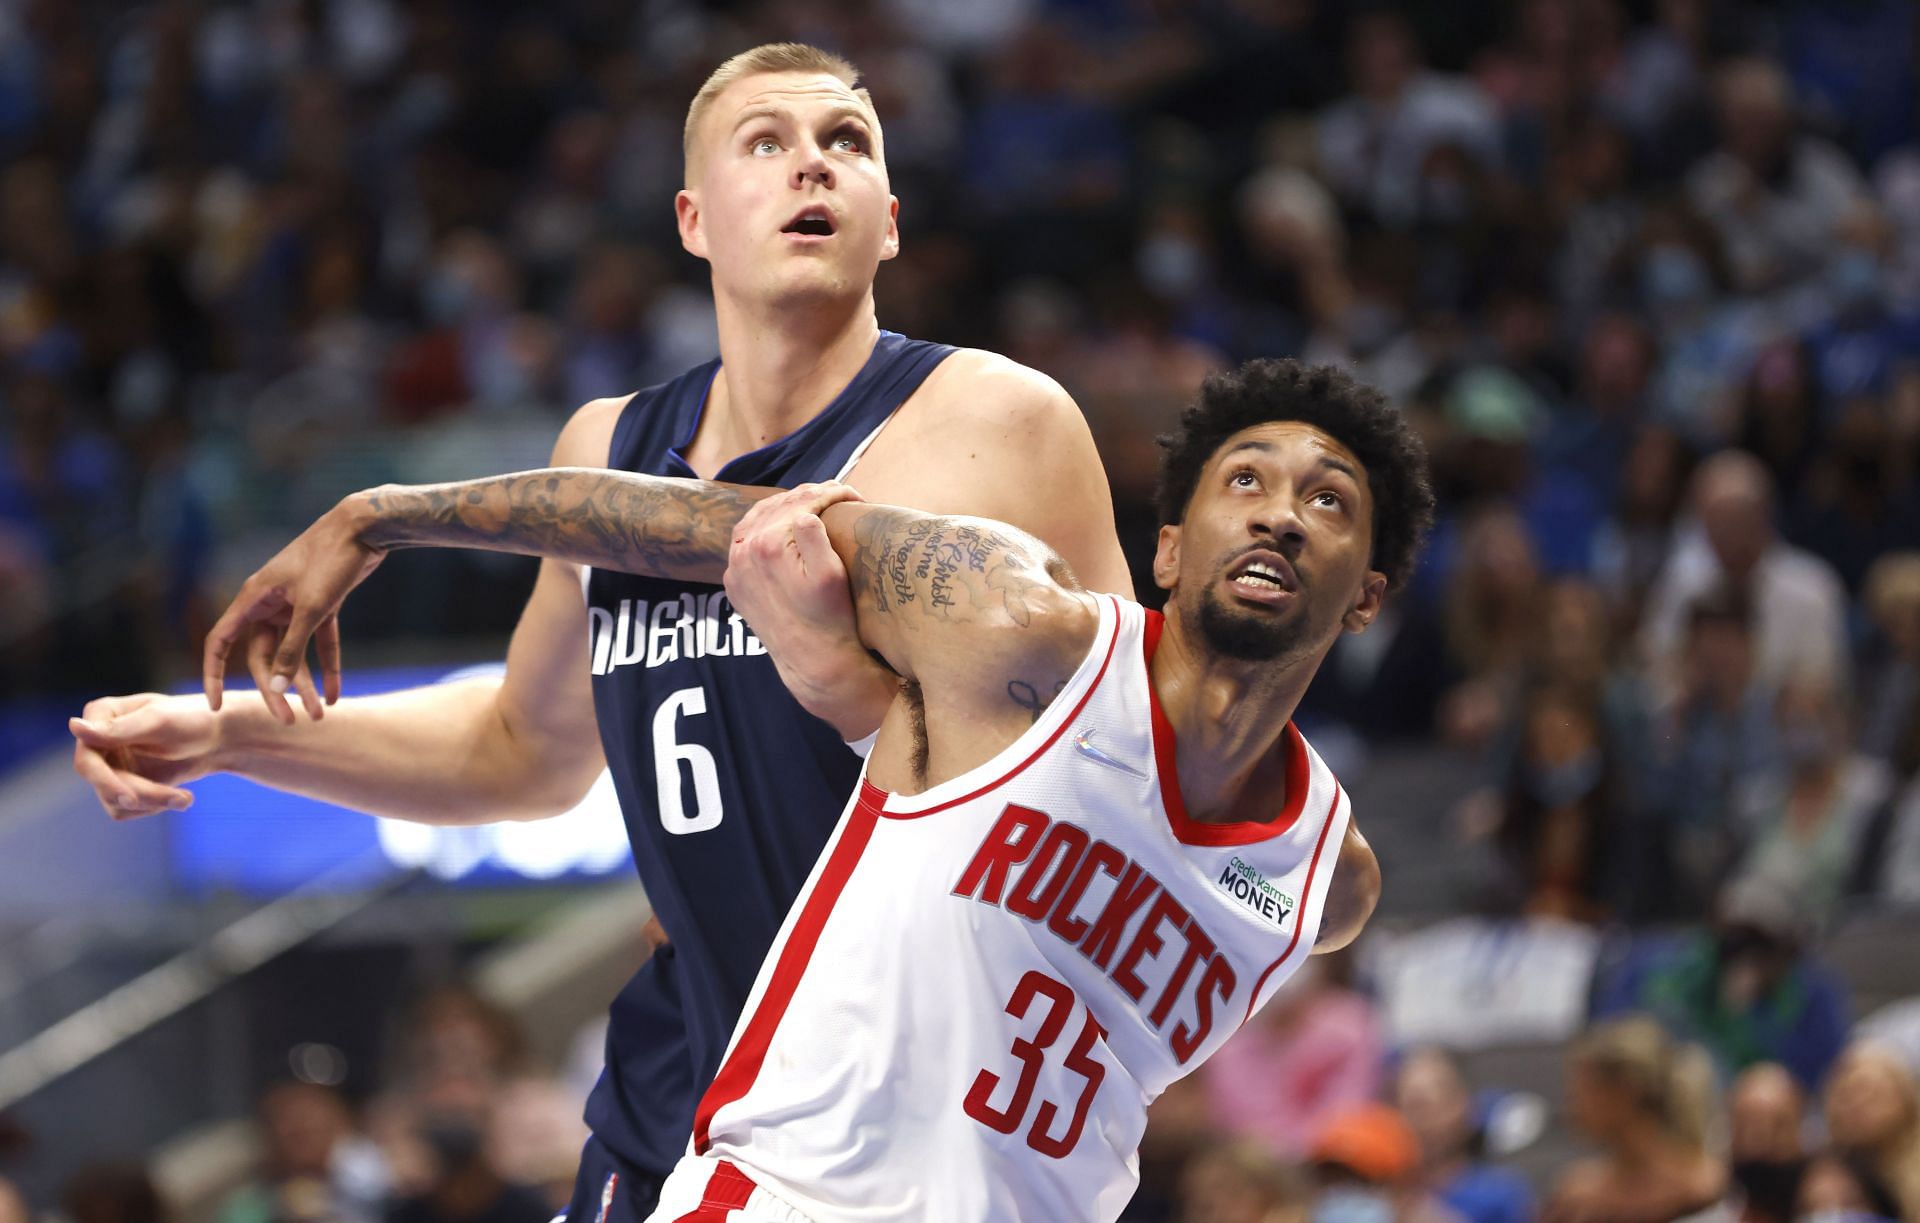 Dallas Mavericks star Kristaps Porzingis battles for a rebound with Christian Wood of the Houston Rockets